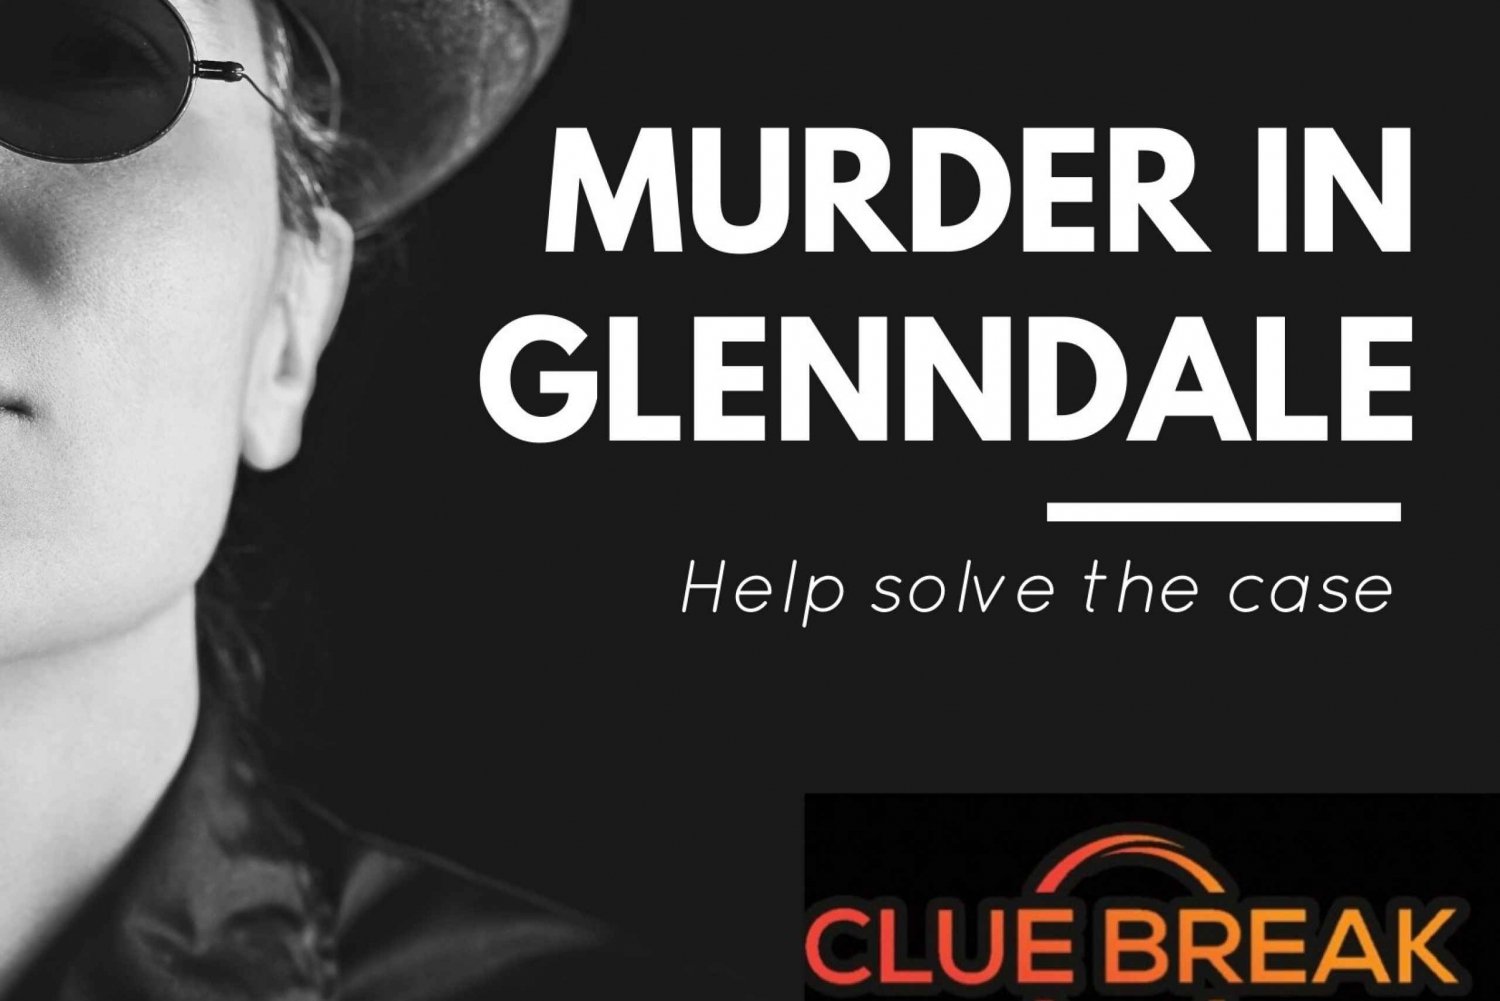 Dublino: Murder Mystery City Exploration Game